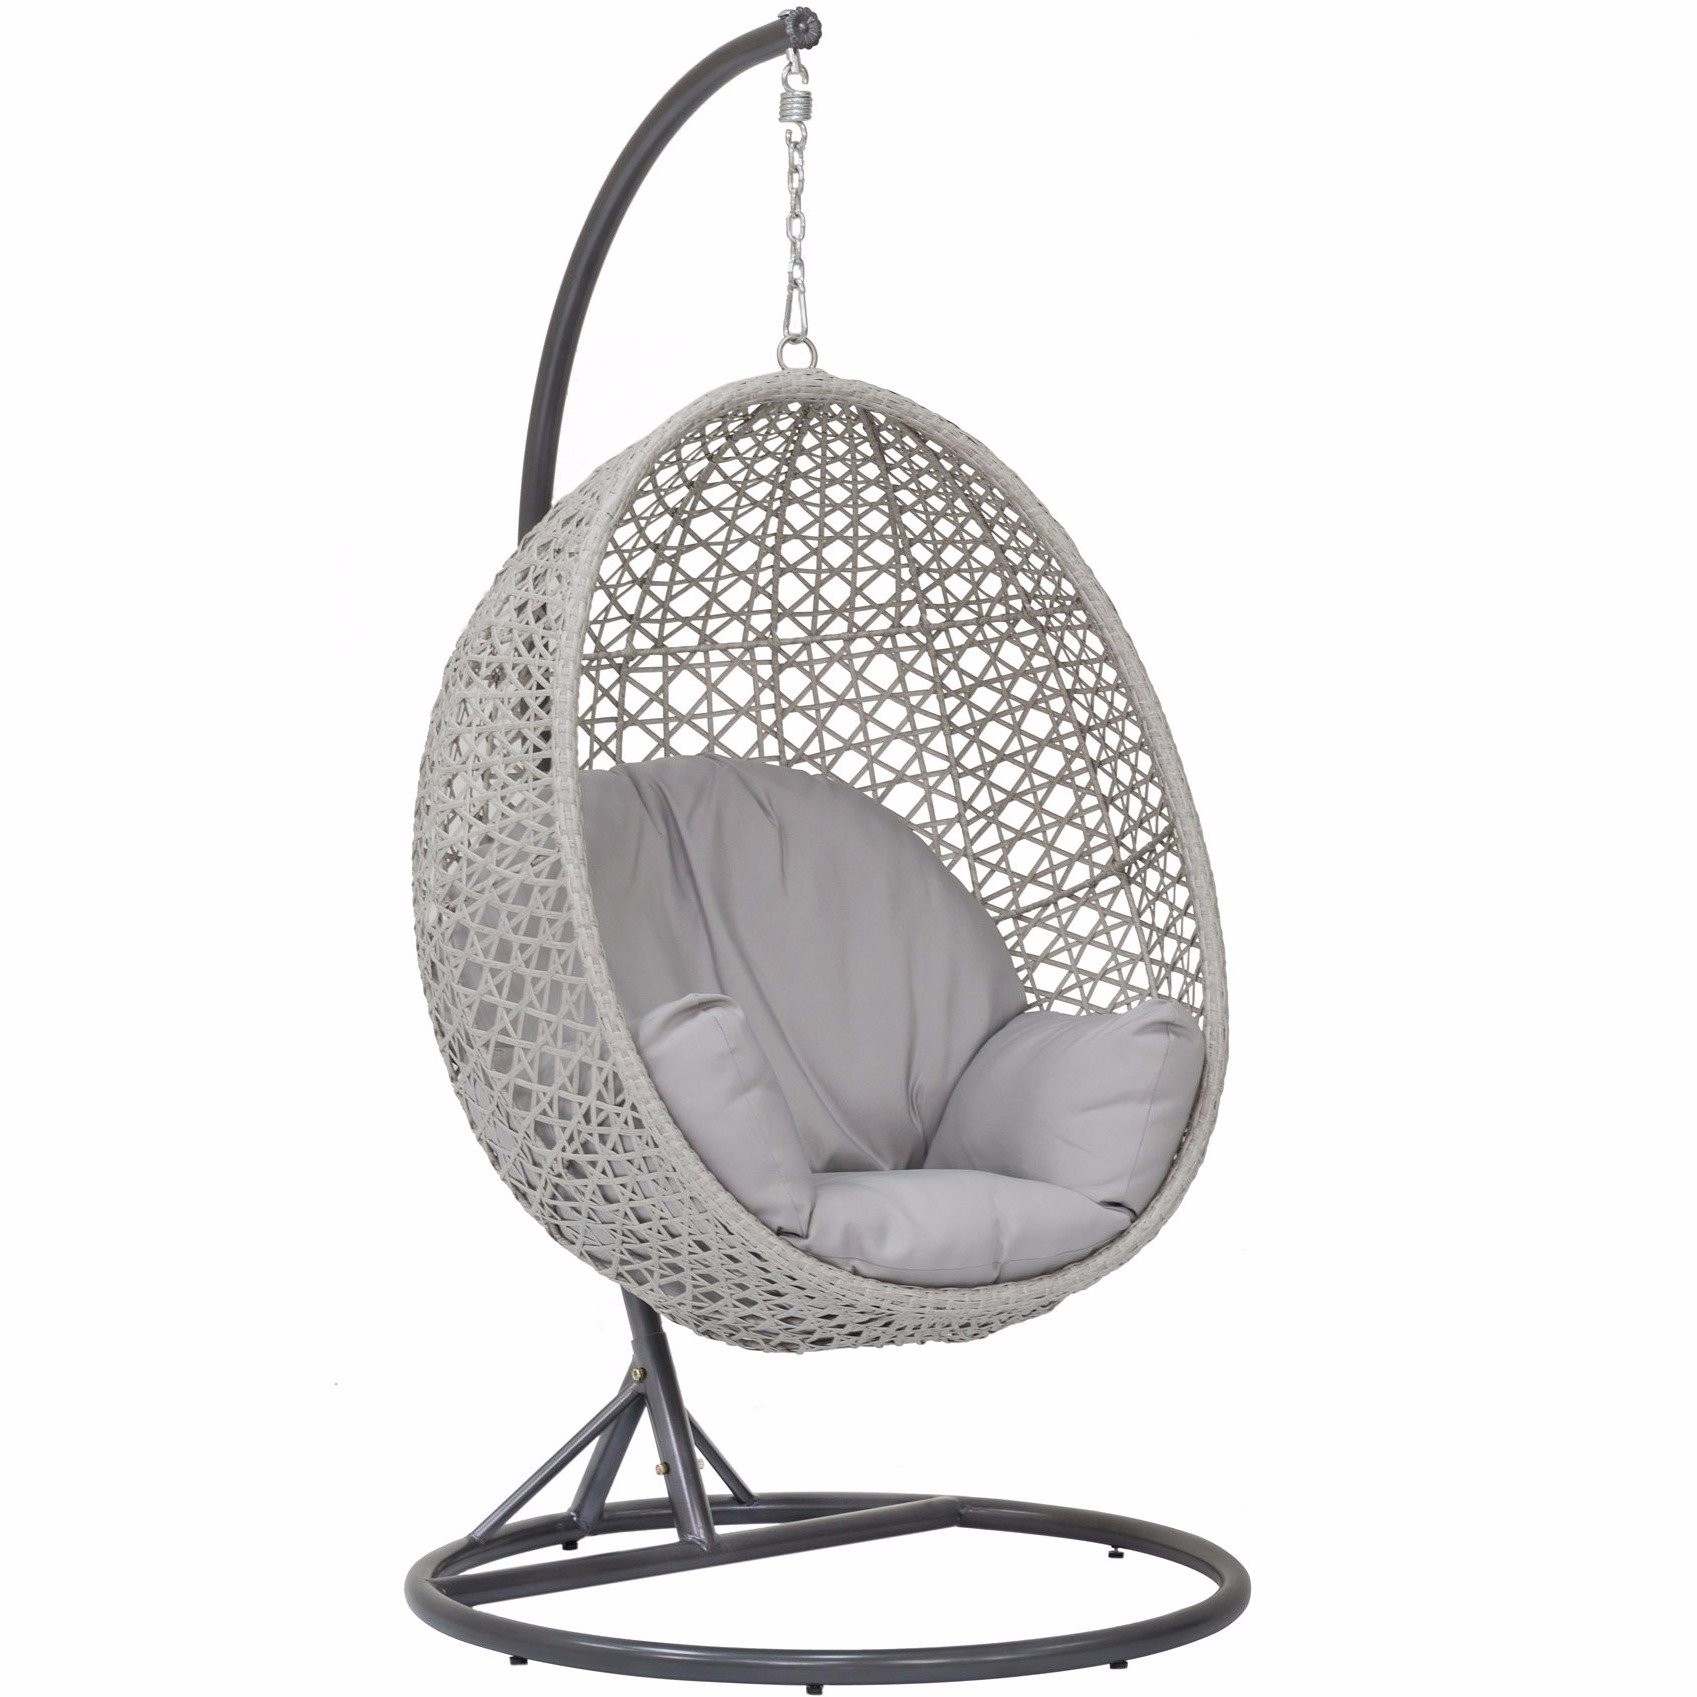 China Garden Egg Swing Chair Supplier